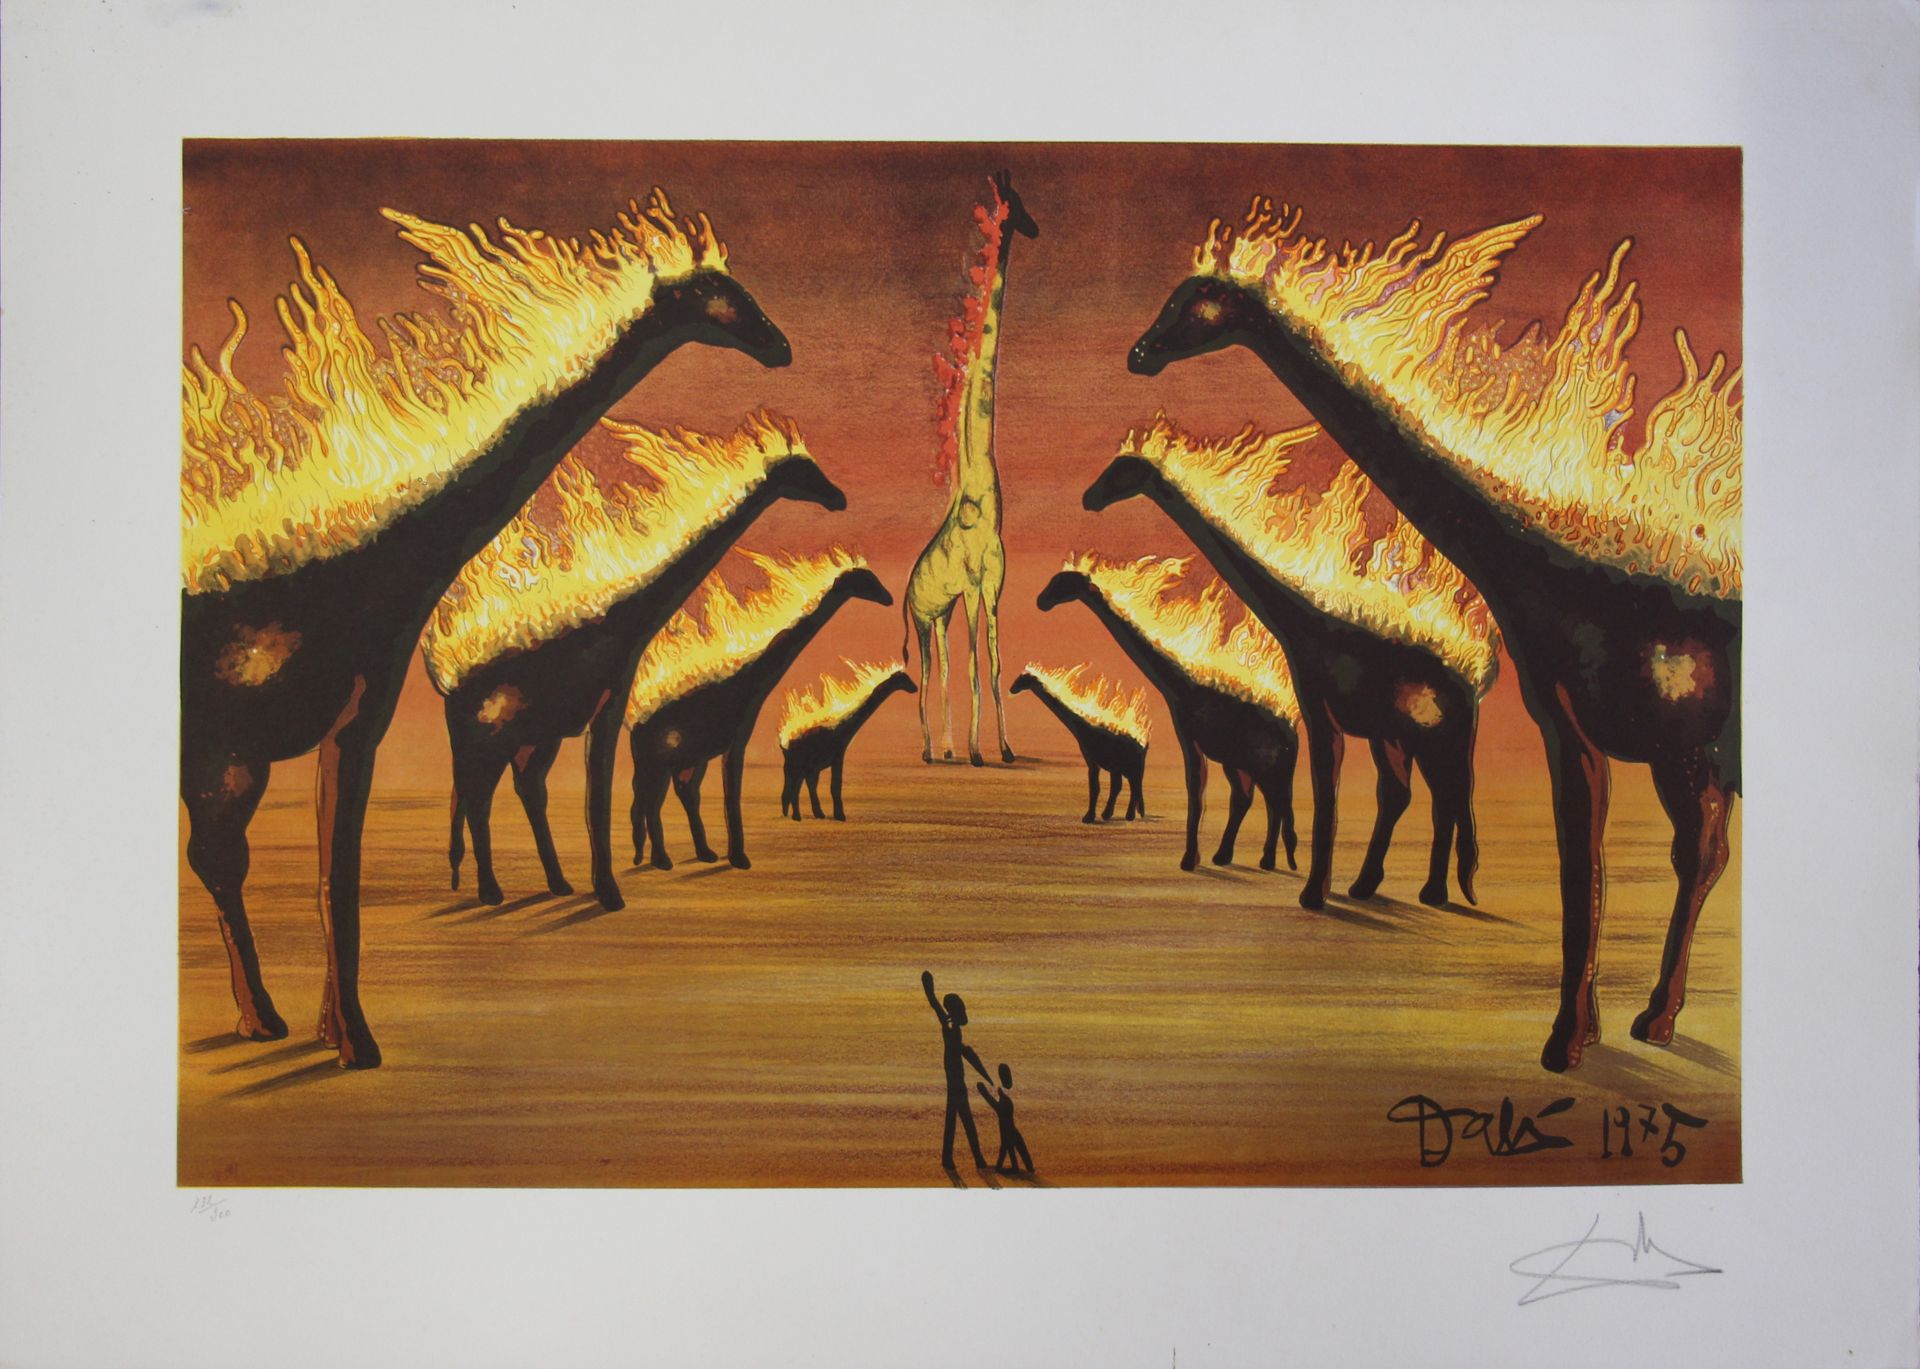 Null 萨尔瓦多-达利(1904-1989)
着火的长颈鹿 (1975)
石墨画，右下角有签名，注明232/300
55 x 76 cm